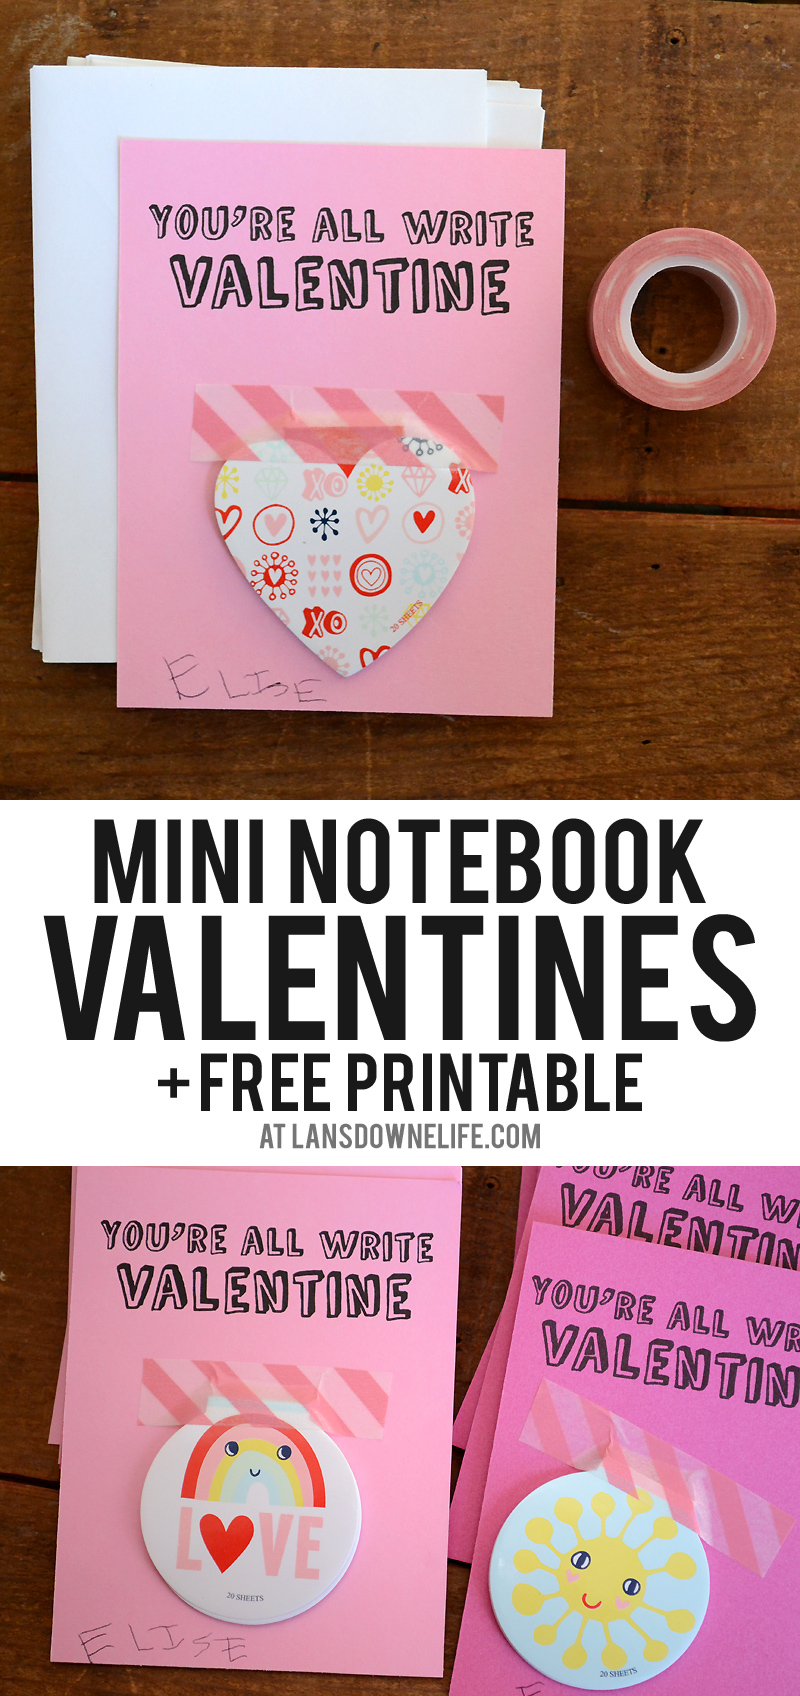 "You're all write valentine" Free printable.